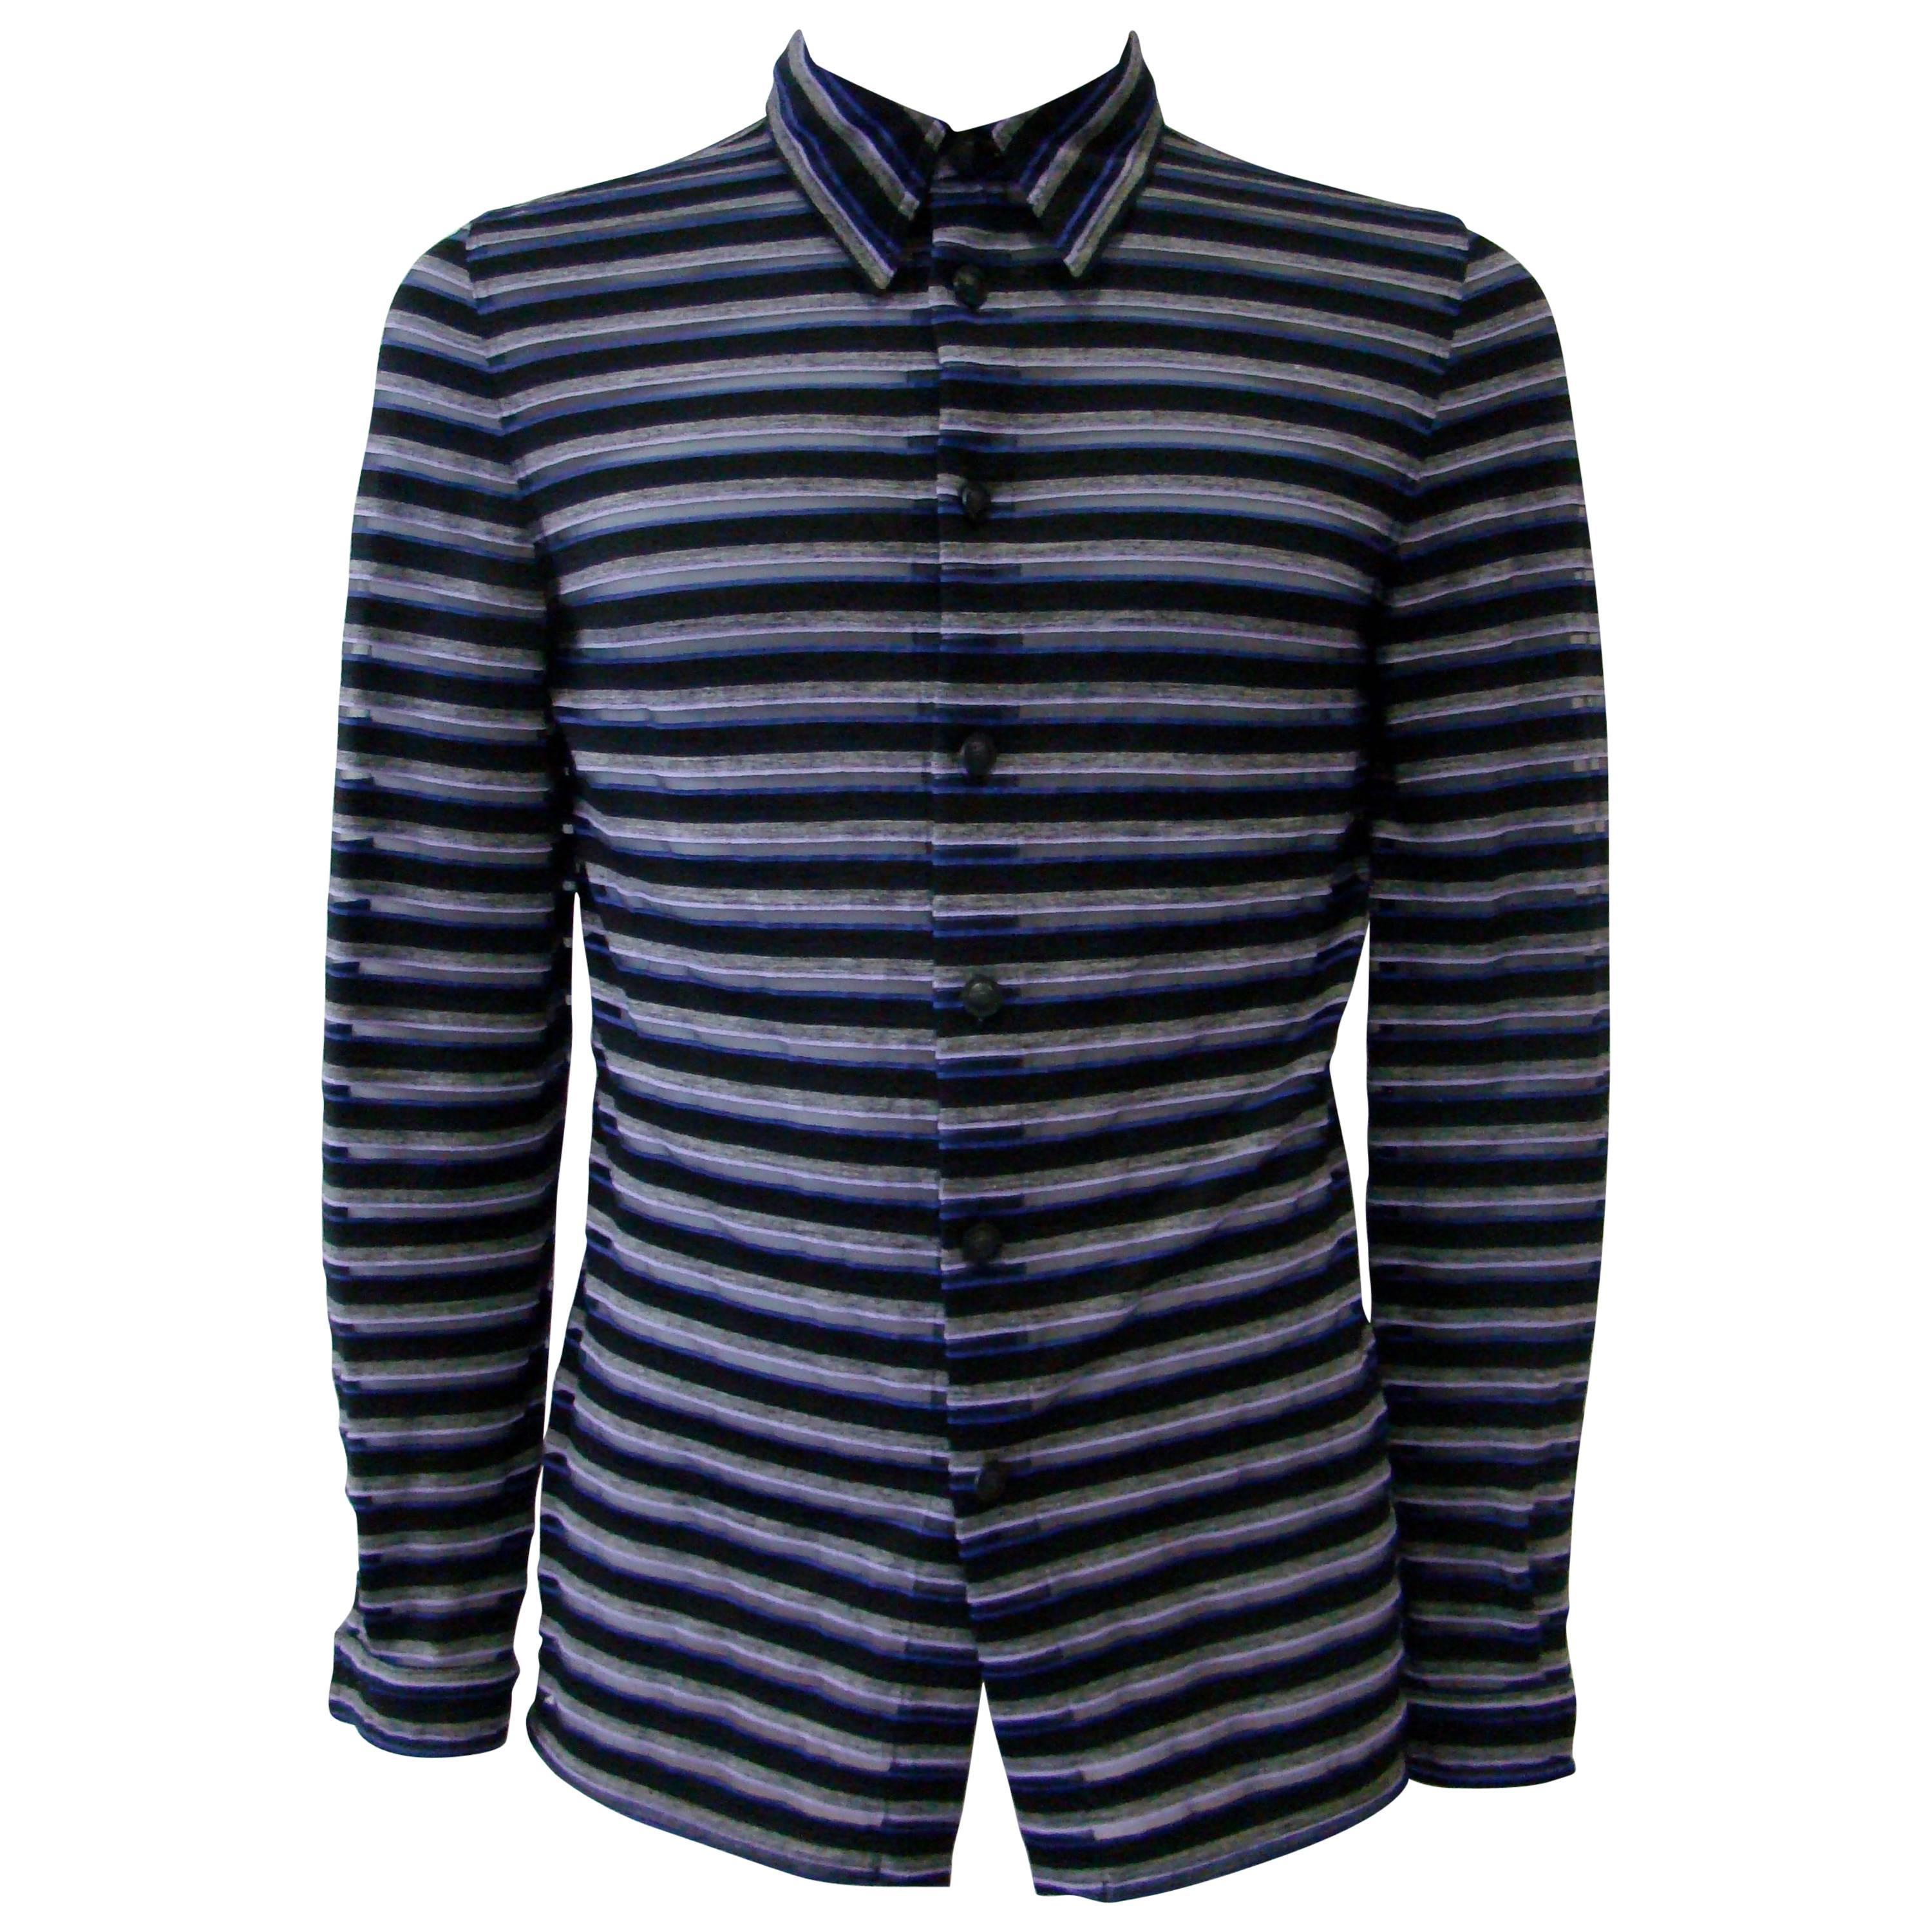 Gianni Versace Striped Sheer Shirt Fall 1997 For Sale